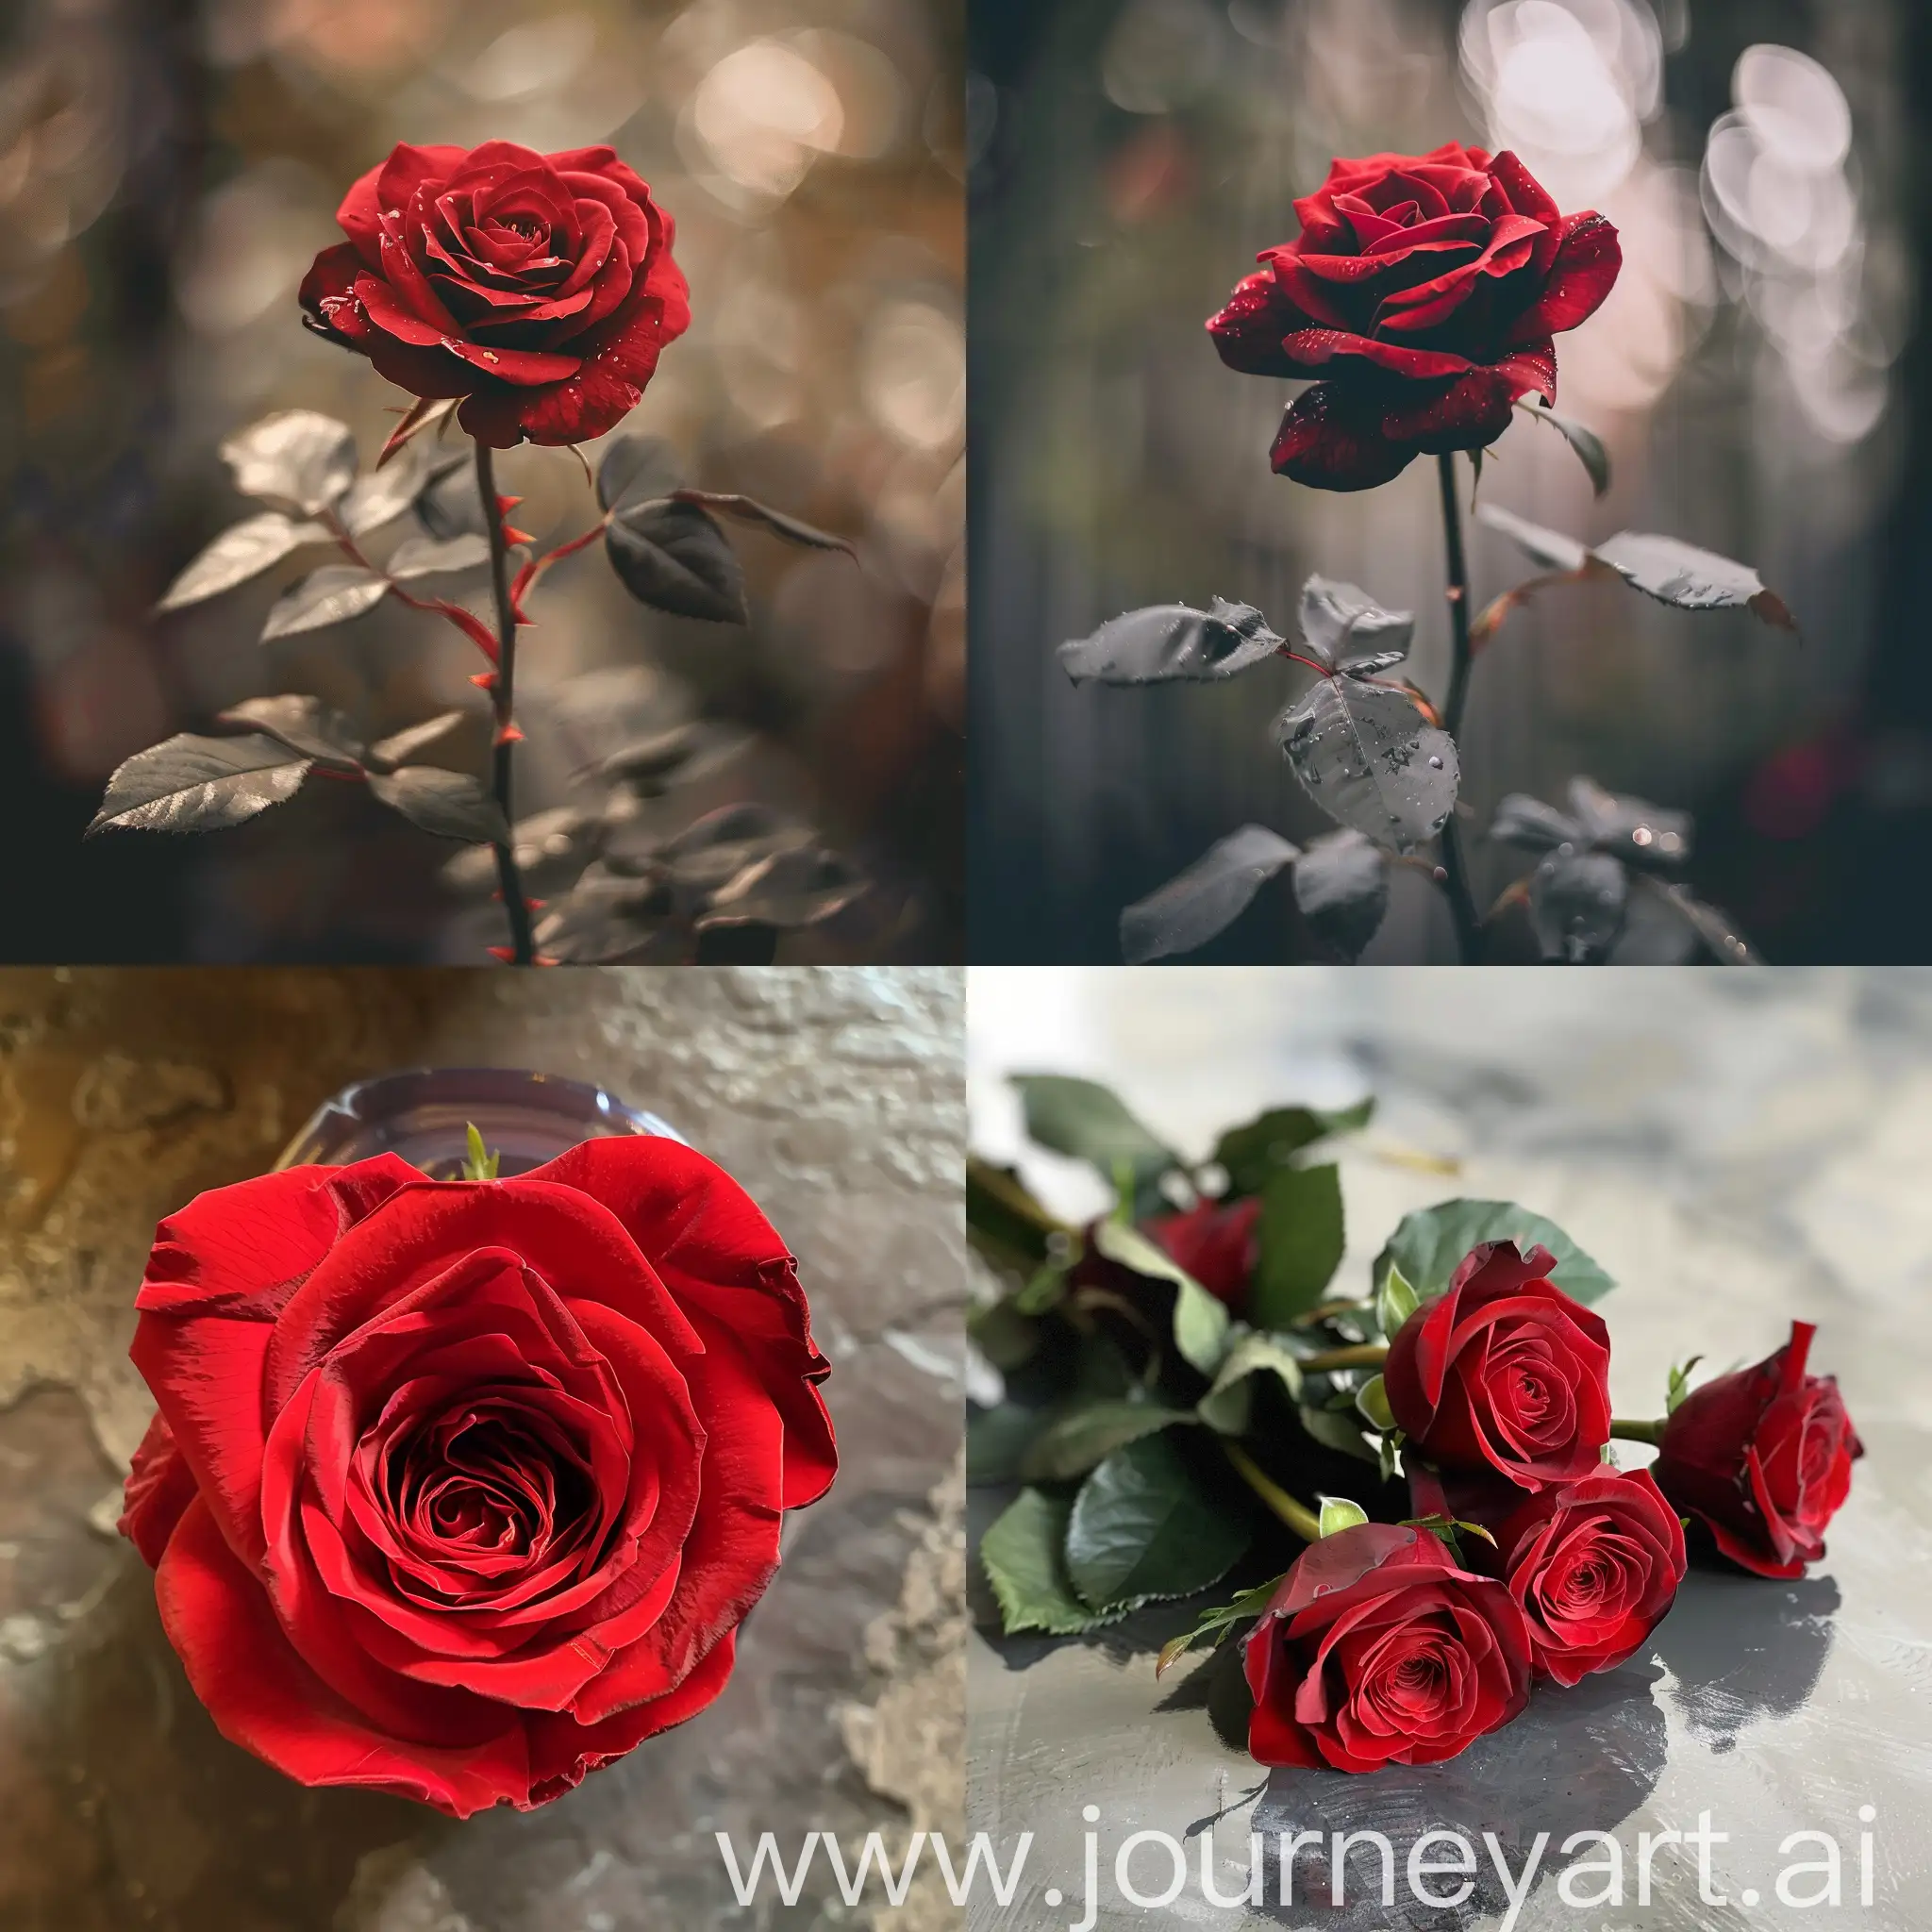 Romantic-RoseThemed-Valentines-Day-Celebration